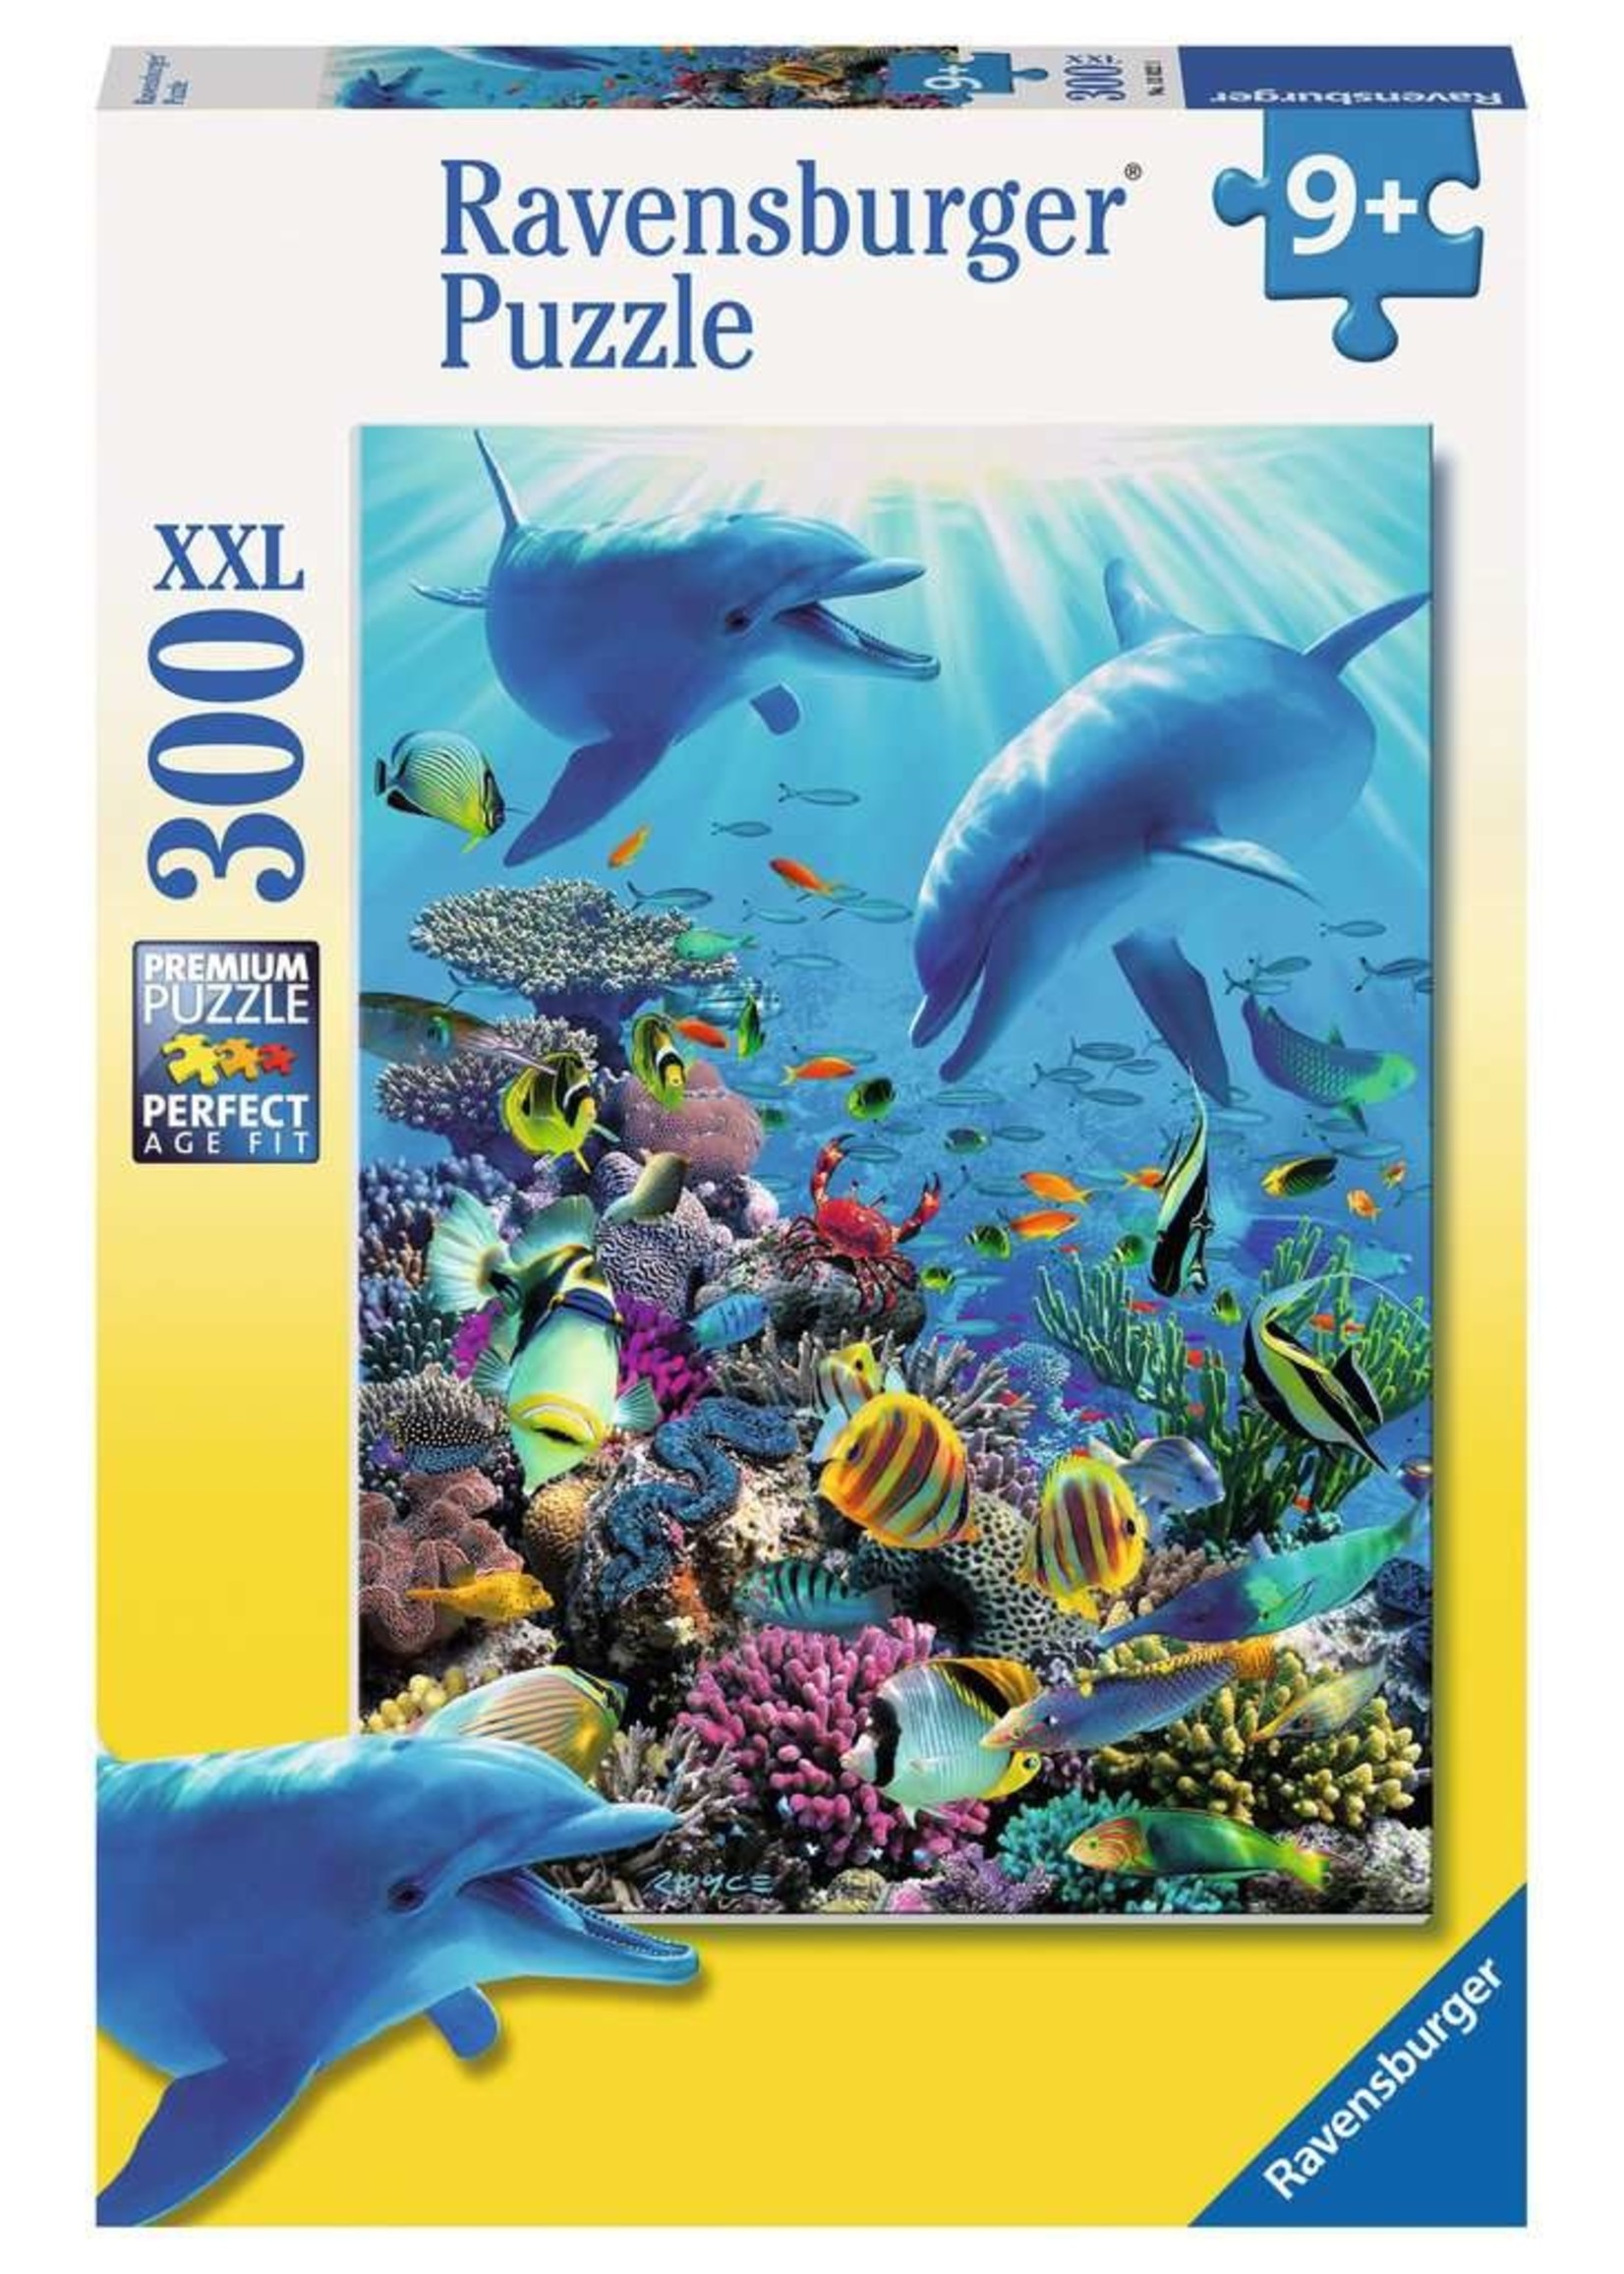 Ravensburger "Underwater Adventure" 300 Piece Puzzle